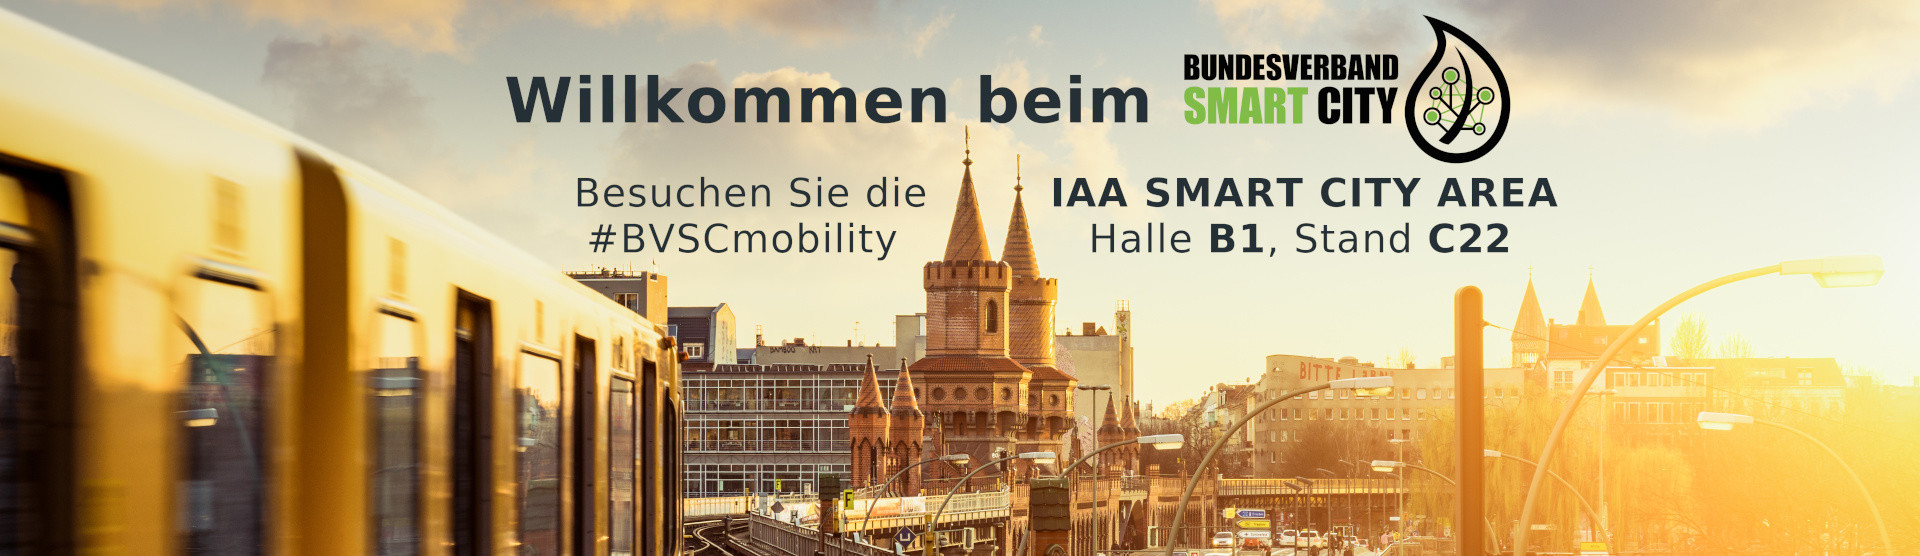 Bundesverband Smart City e.V. -  German Smart City Association -  IAA Smart City Area